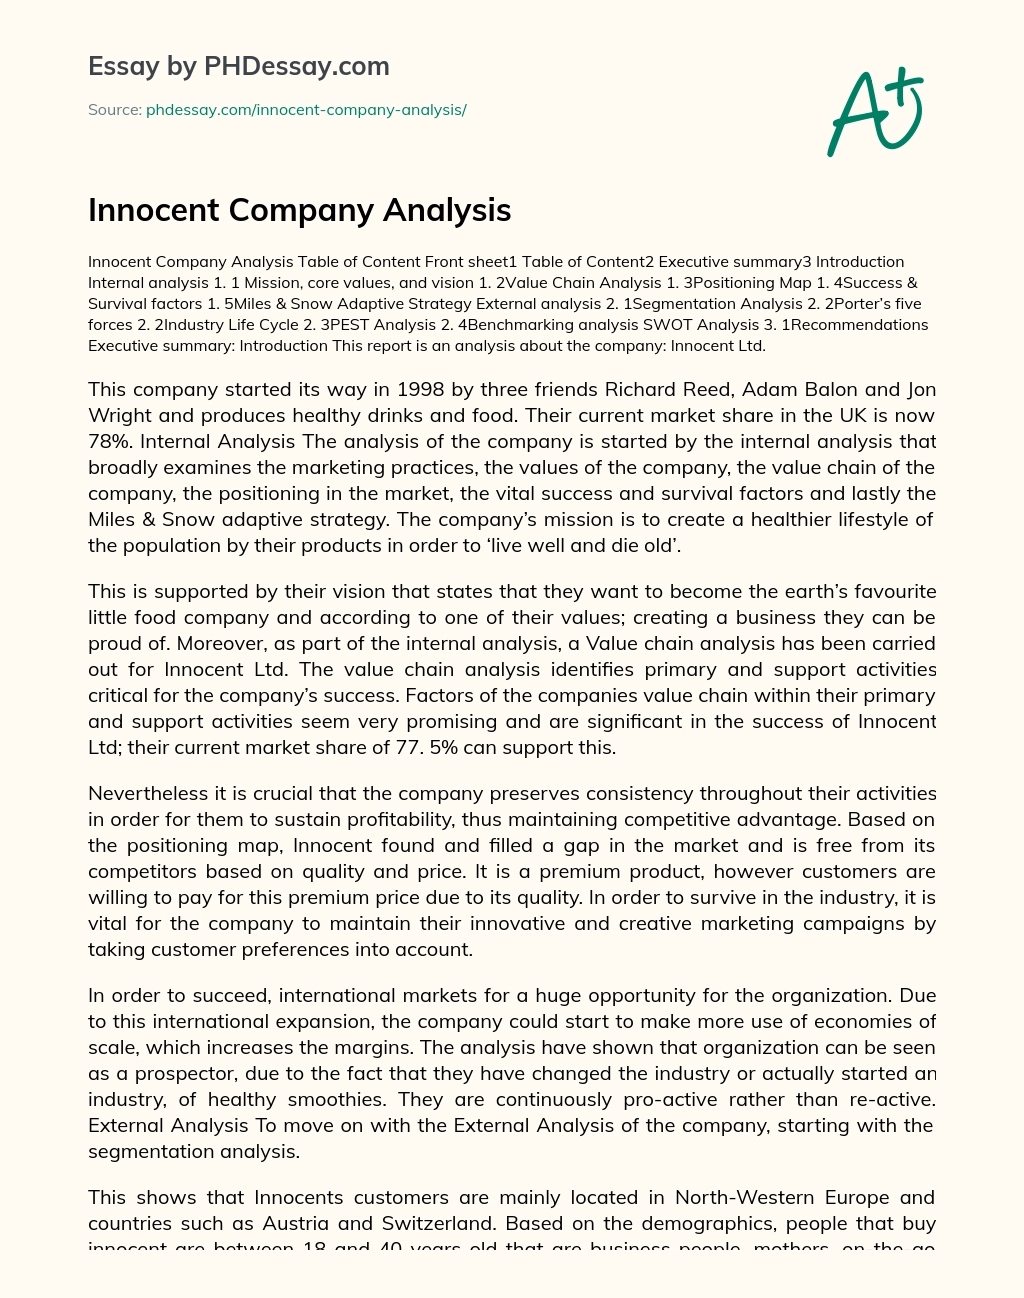 Innocent Company Analysis essay